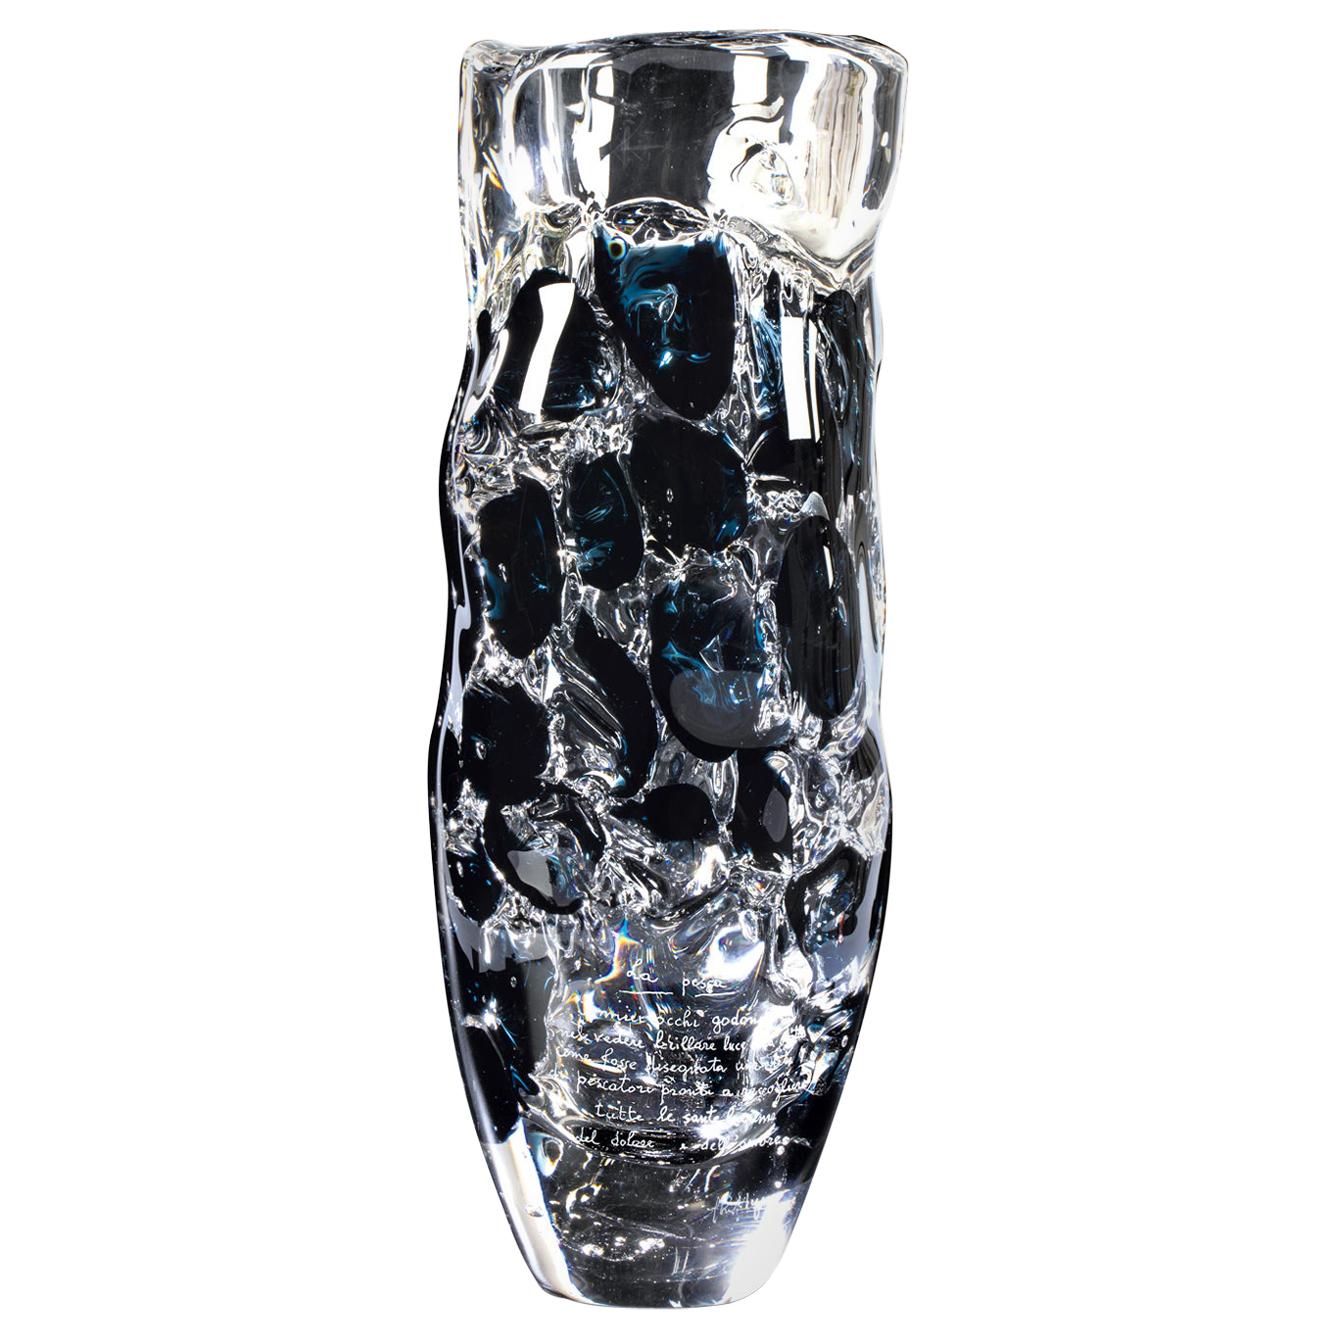 Giampaolo Seguso, " La Pesca" Vase, One of a Kind Murano Glass Art Works